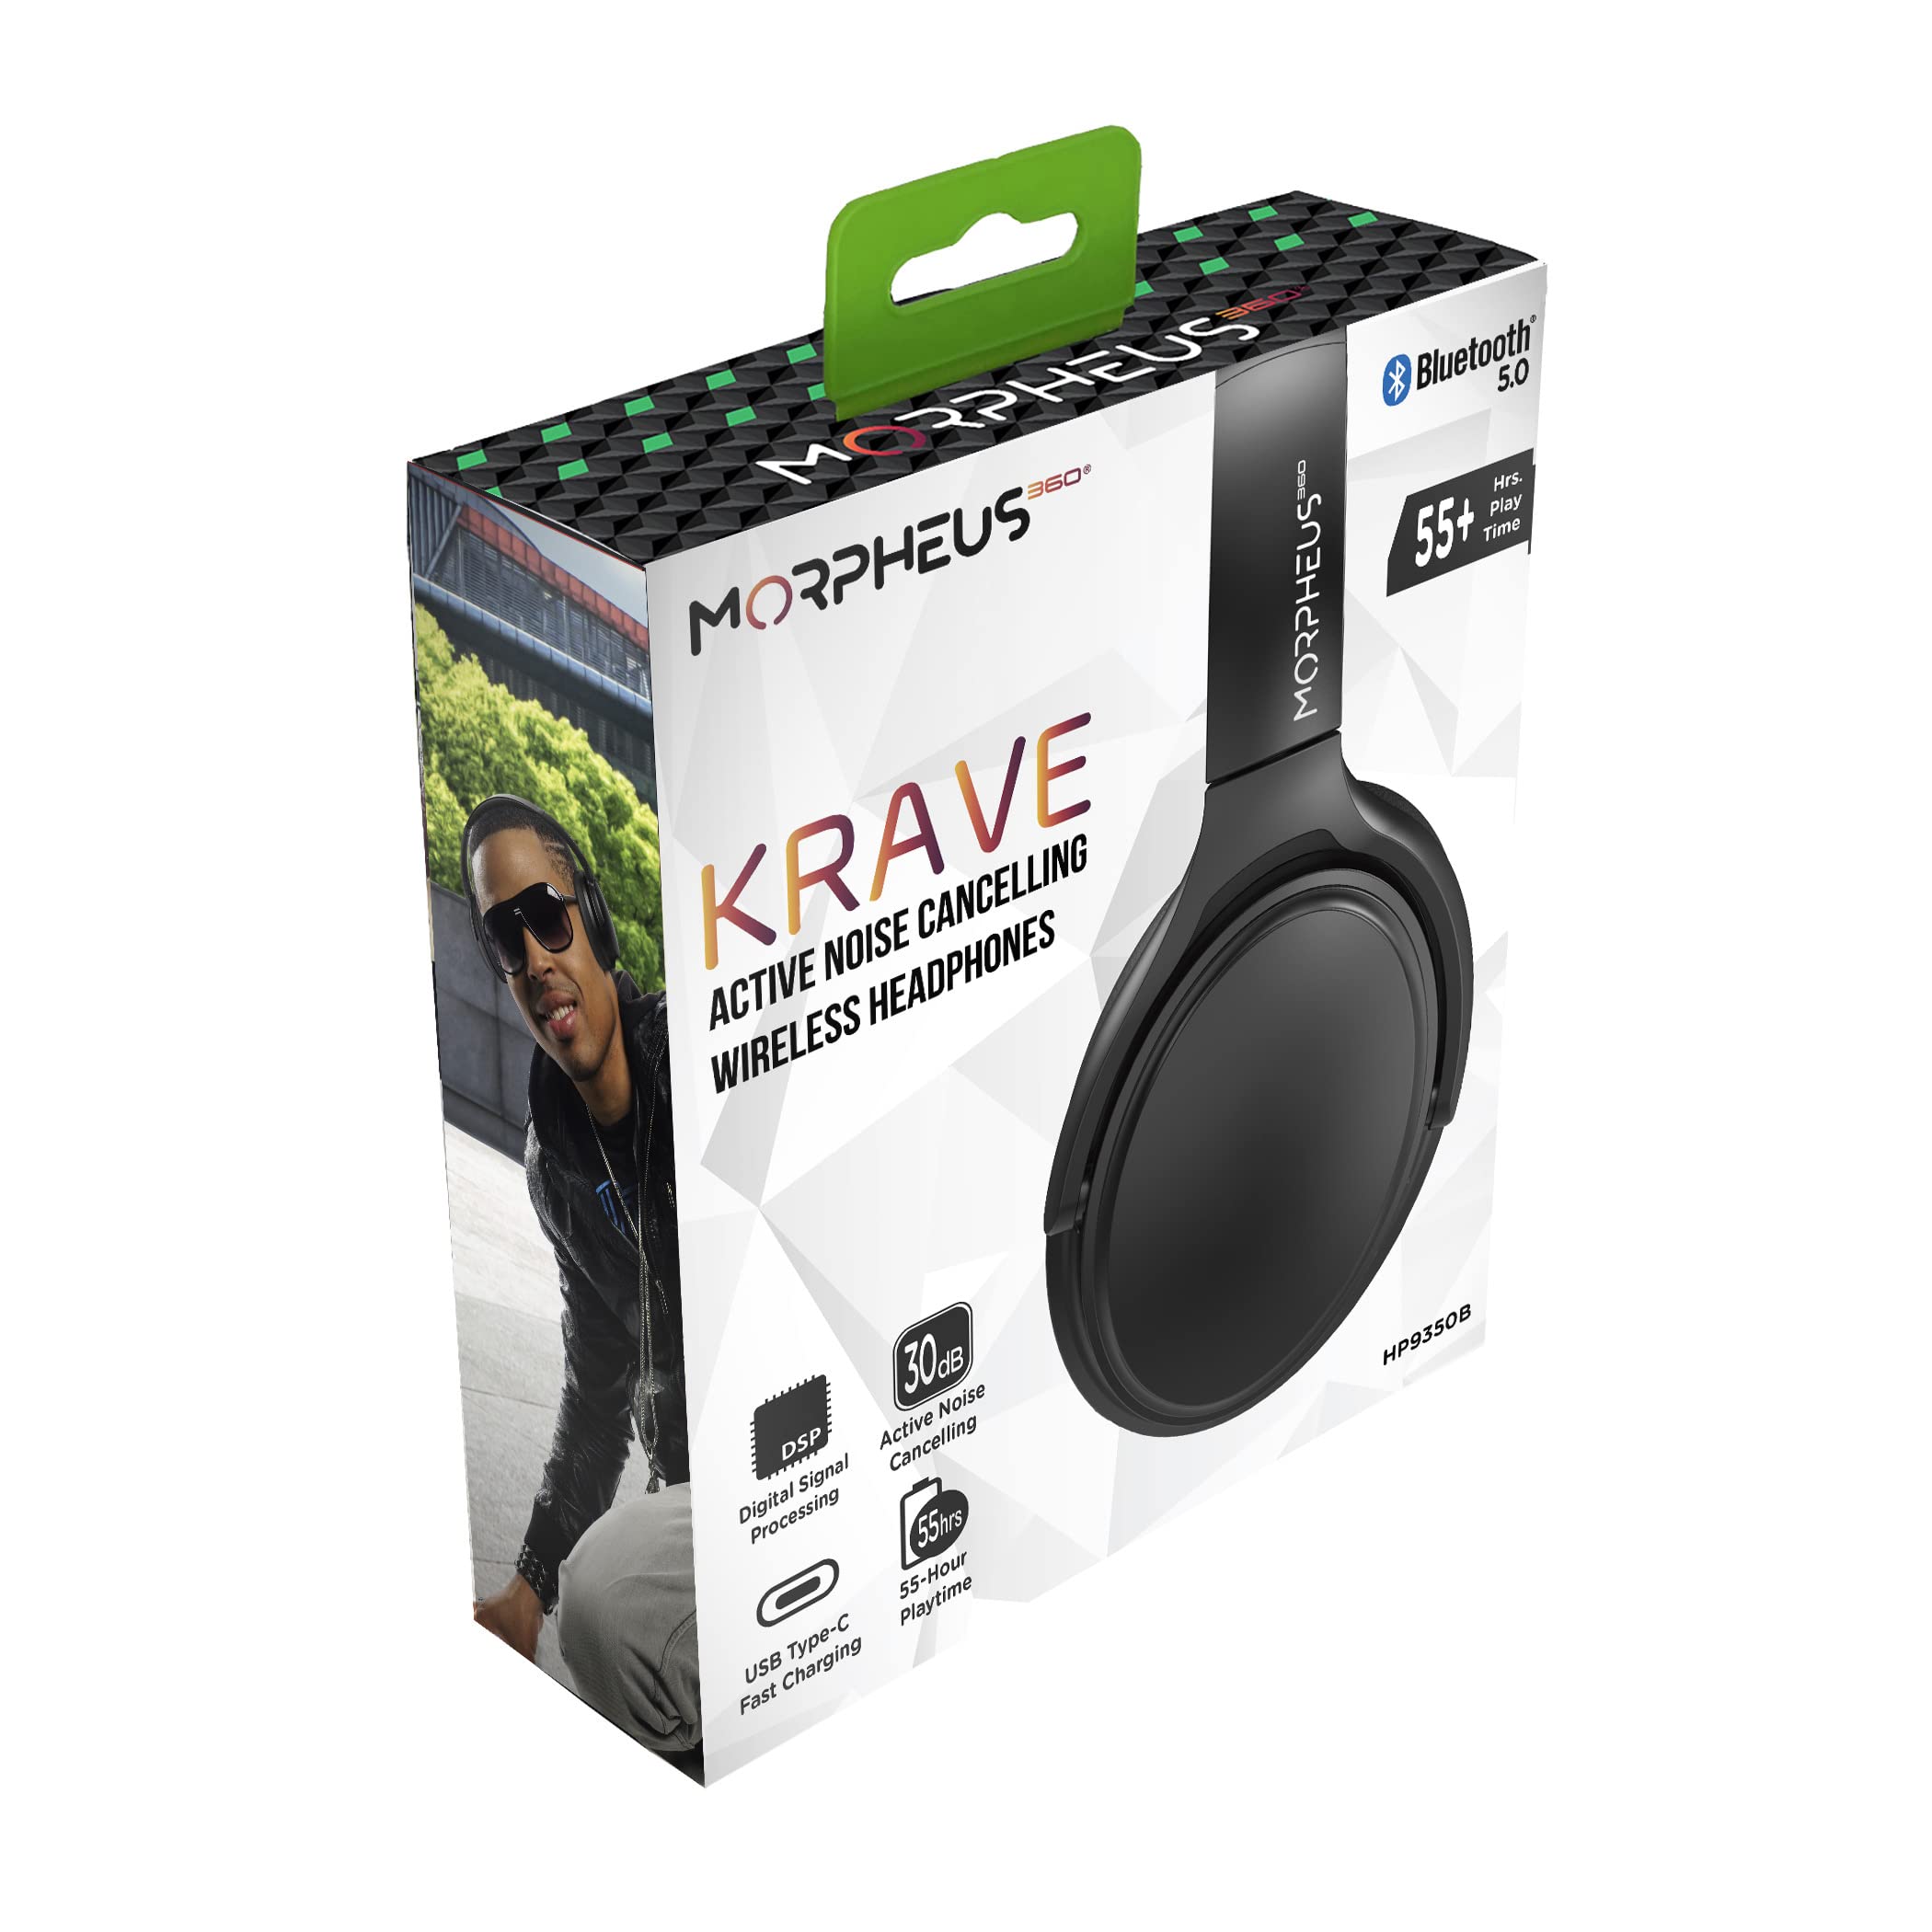 Morpheus 360 Krave ANC Wireless Noise Cancelling Headphones - Bluetooth 5.0 Headset w/Microphone - HP9350B.